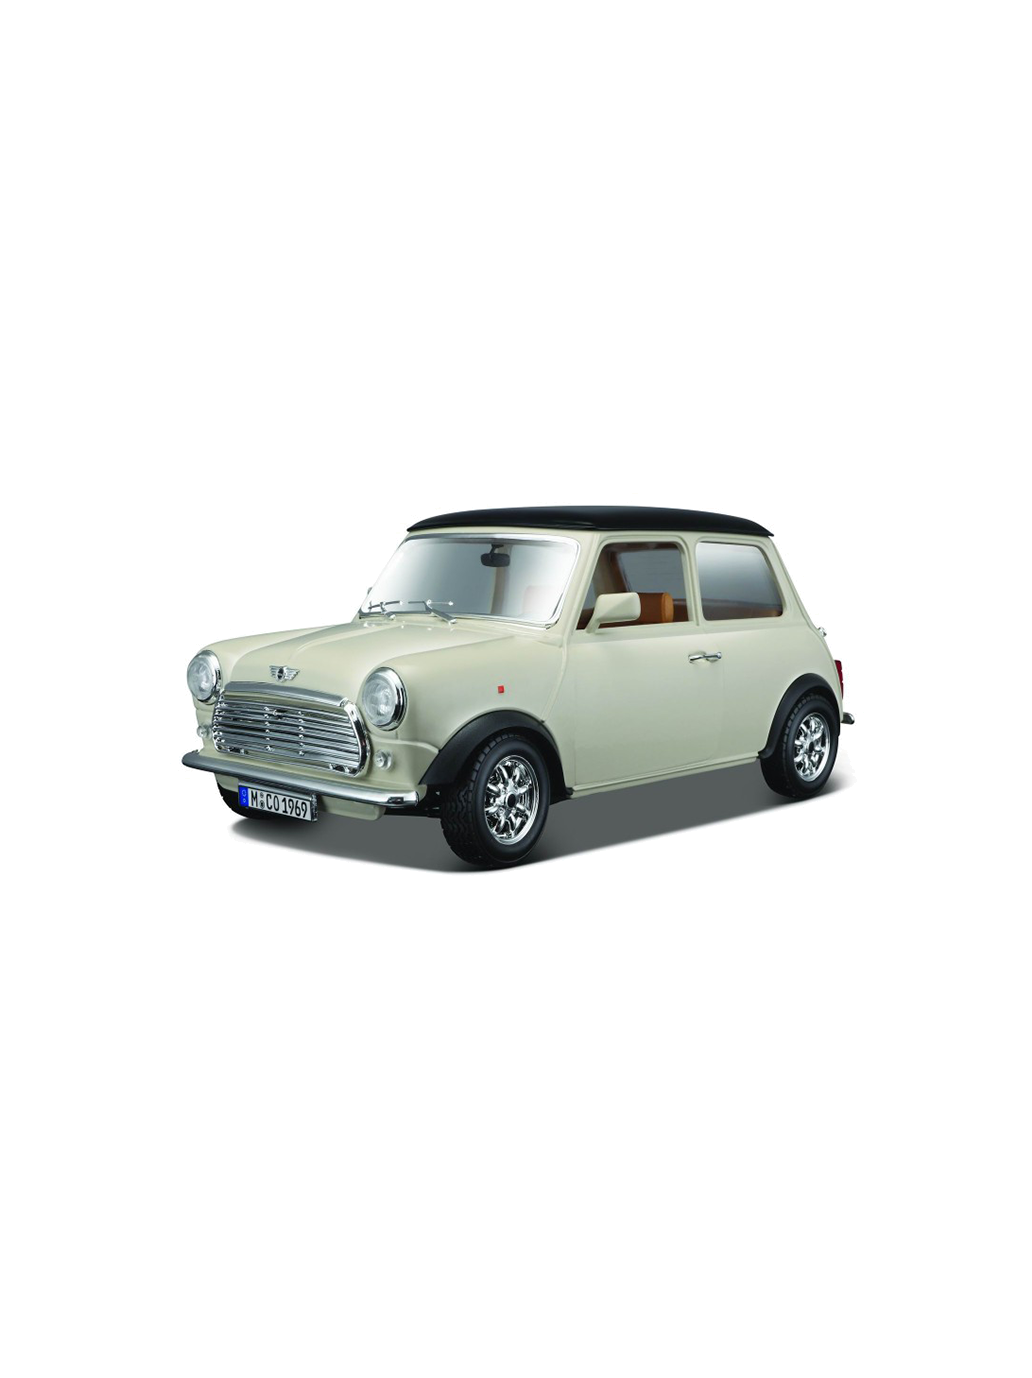 Un gran modelo metálico de un coche Mini Cooper.